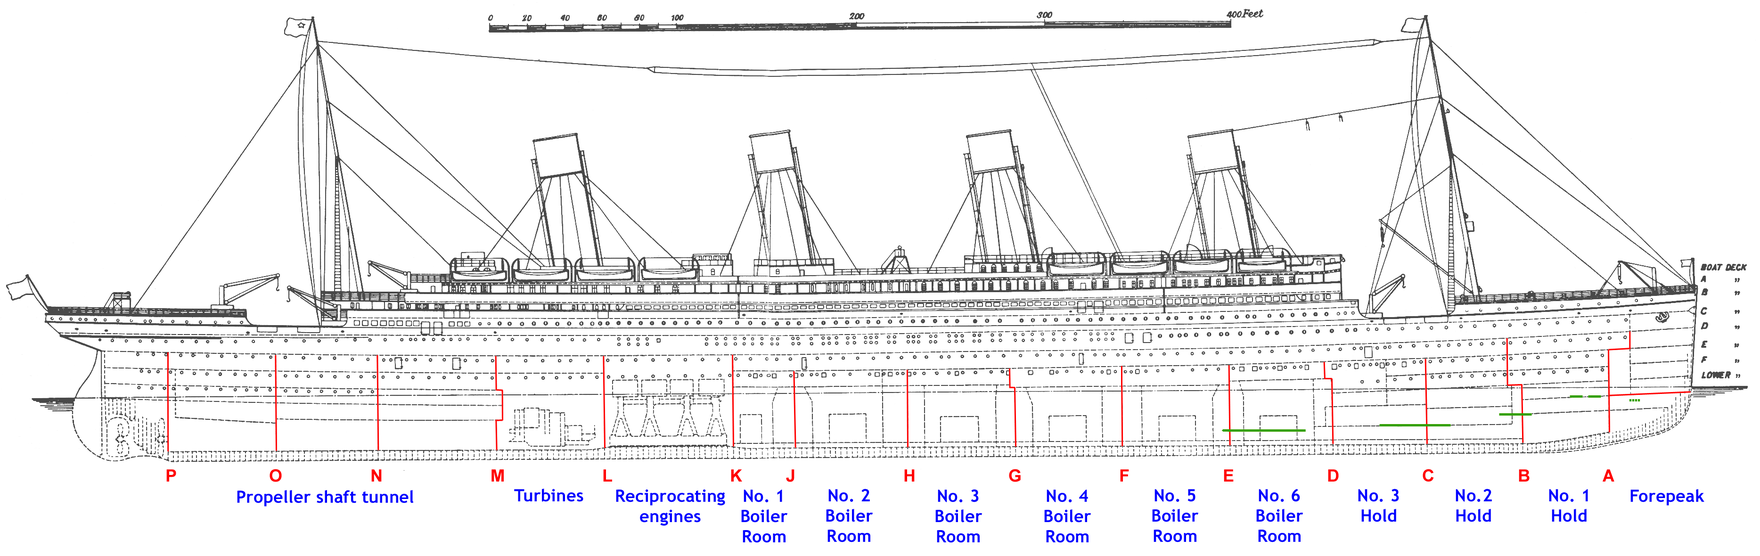 Sinking of the Titanic - Wikiwand